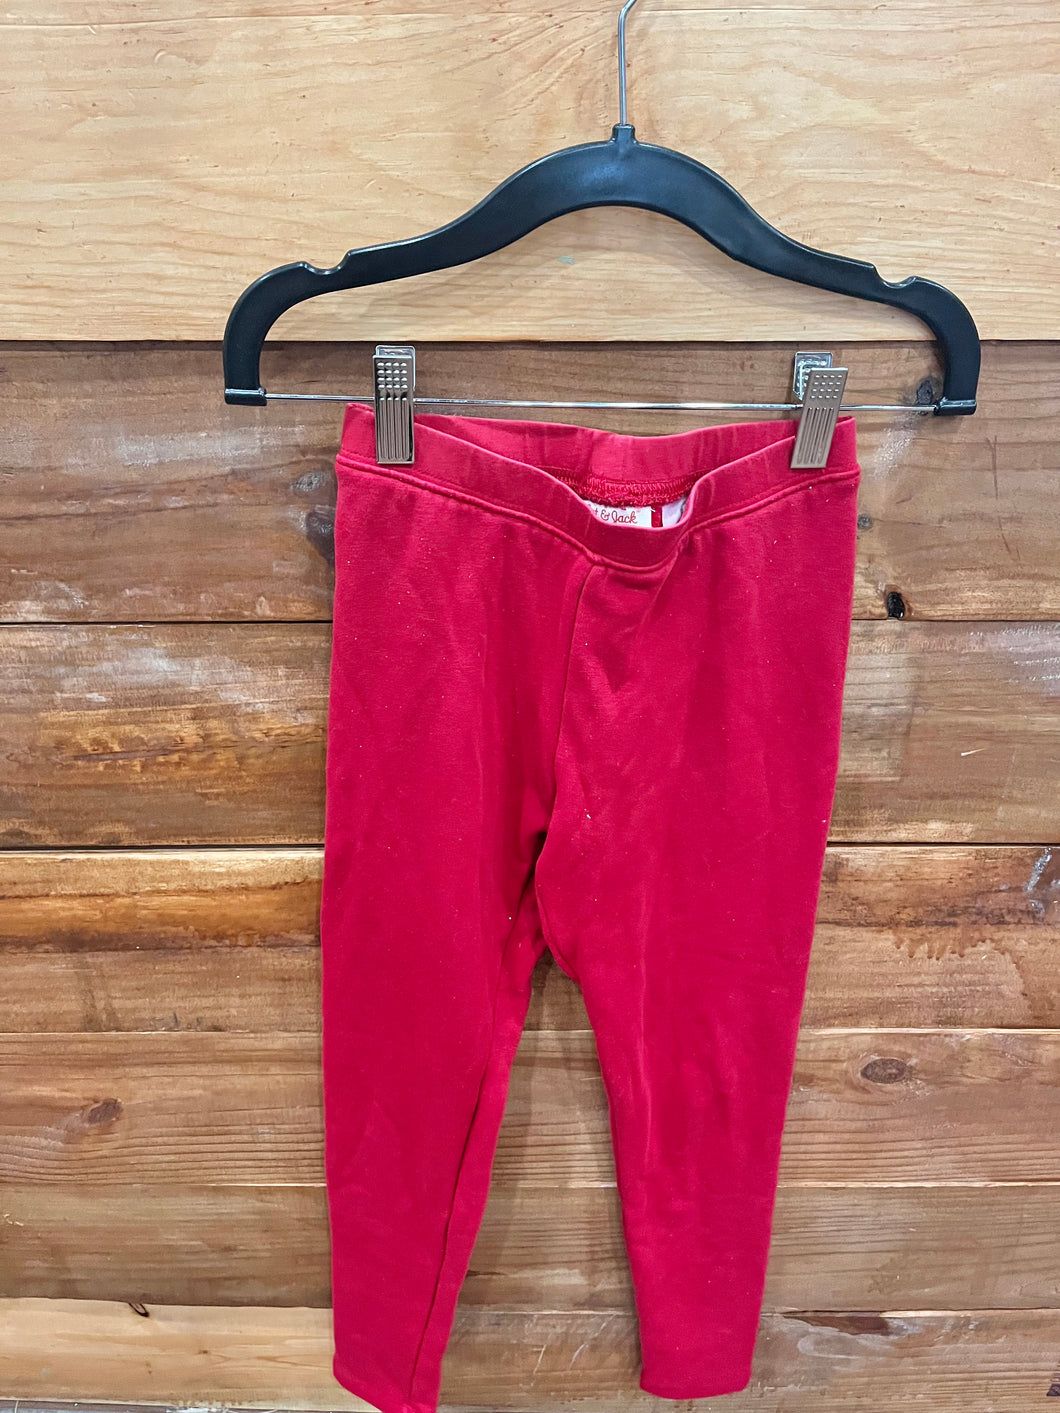 Cat & Jack Red Glitter Pants Size 7/8